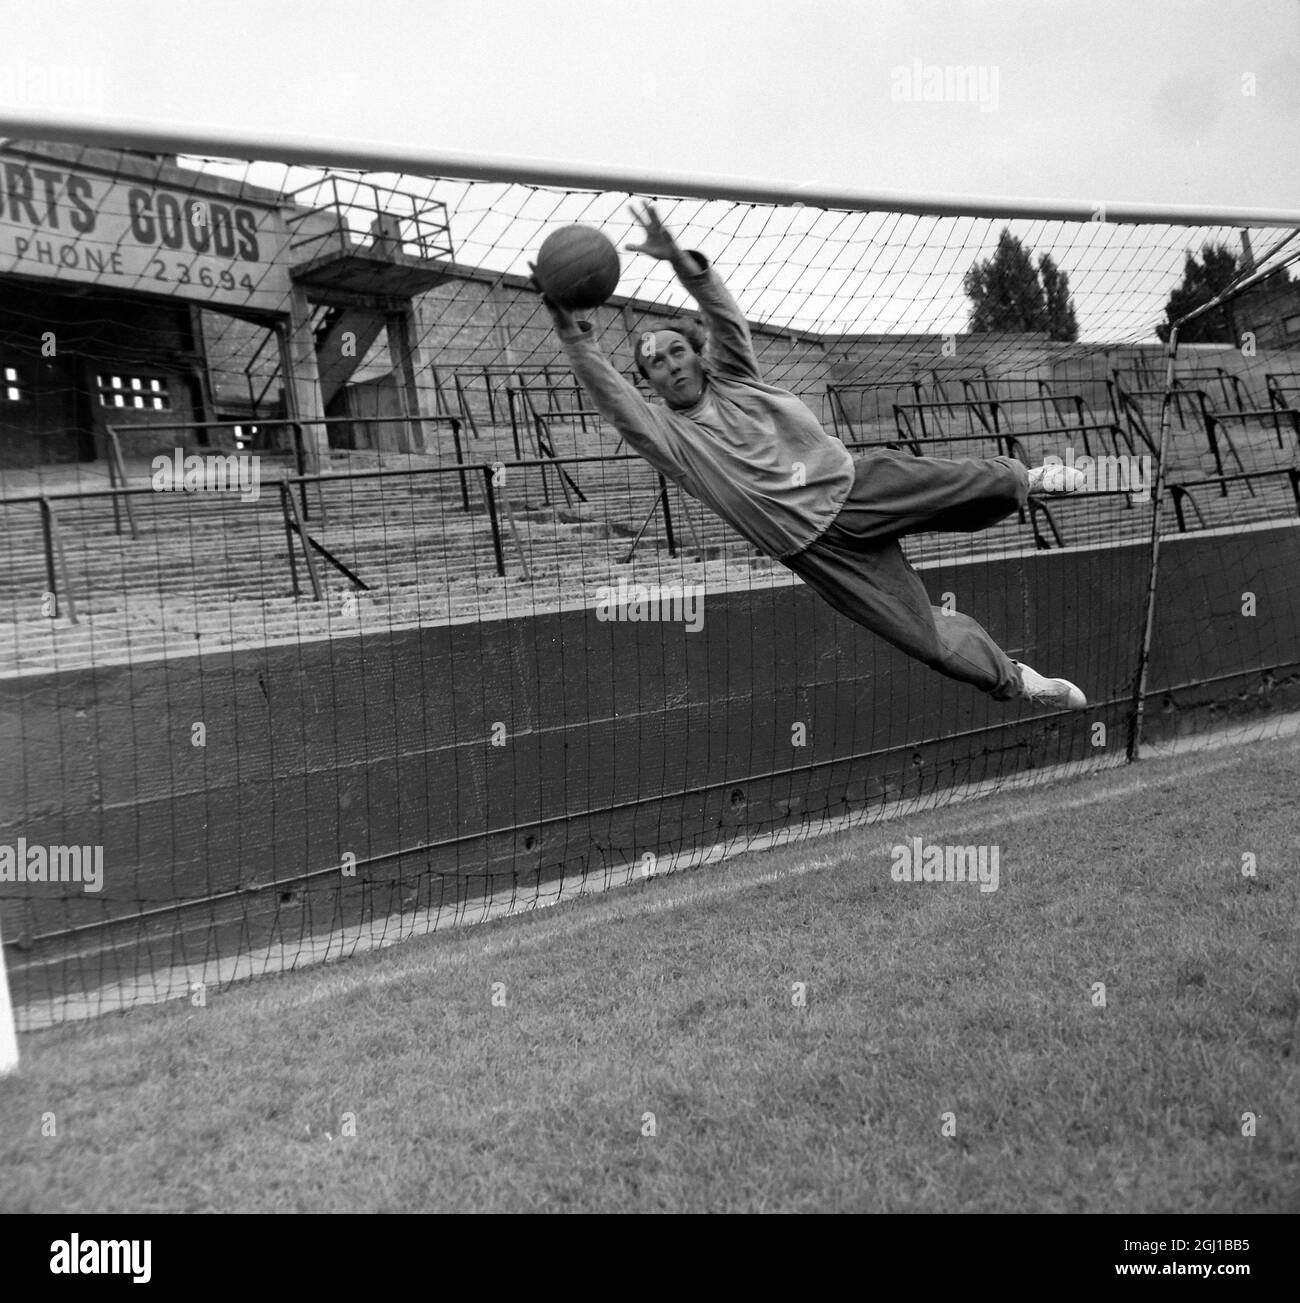 HOLLOWBREAD J - PORTRAIT OF FOOTBALLER OF SOUTHAMPTON FC FOOTBALL CLUB TEAM - ; 14 AUGUST 1964 Stock Photo